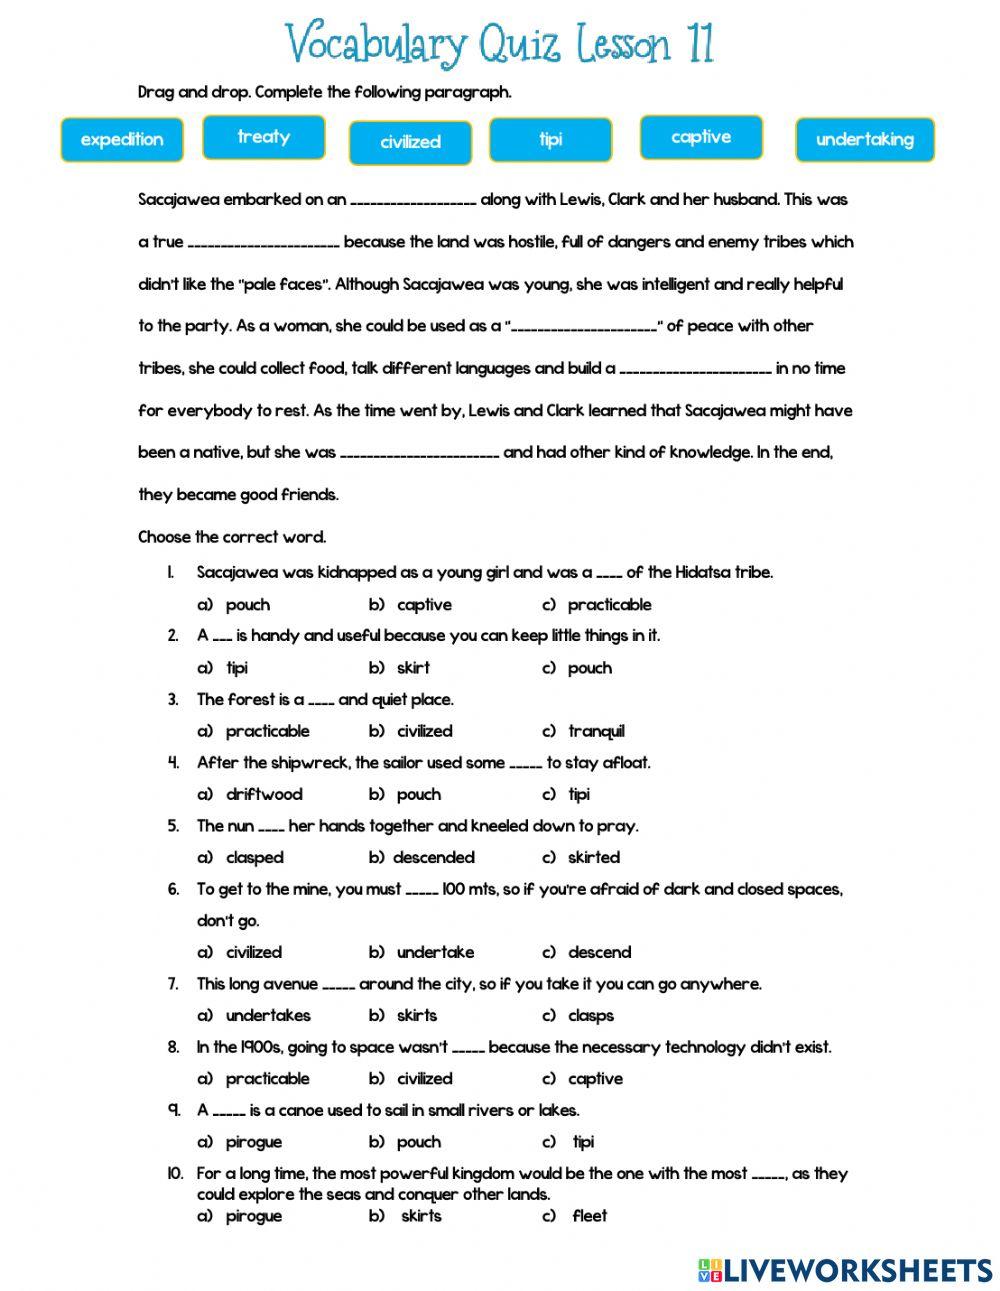 Vocabulary Quiz L11